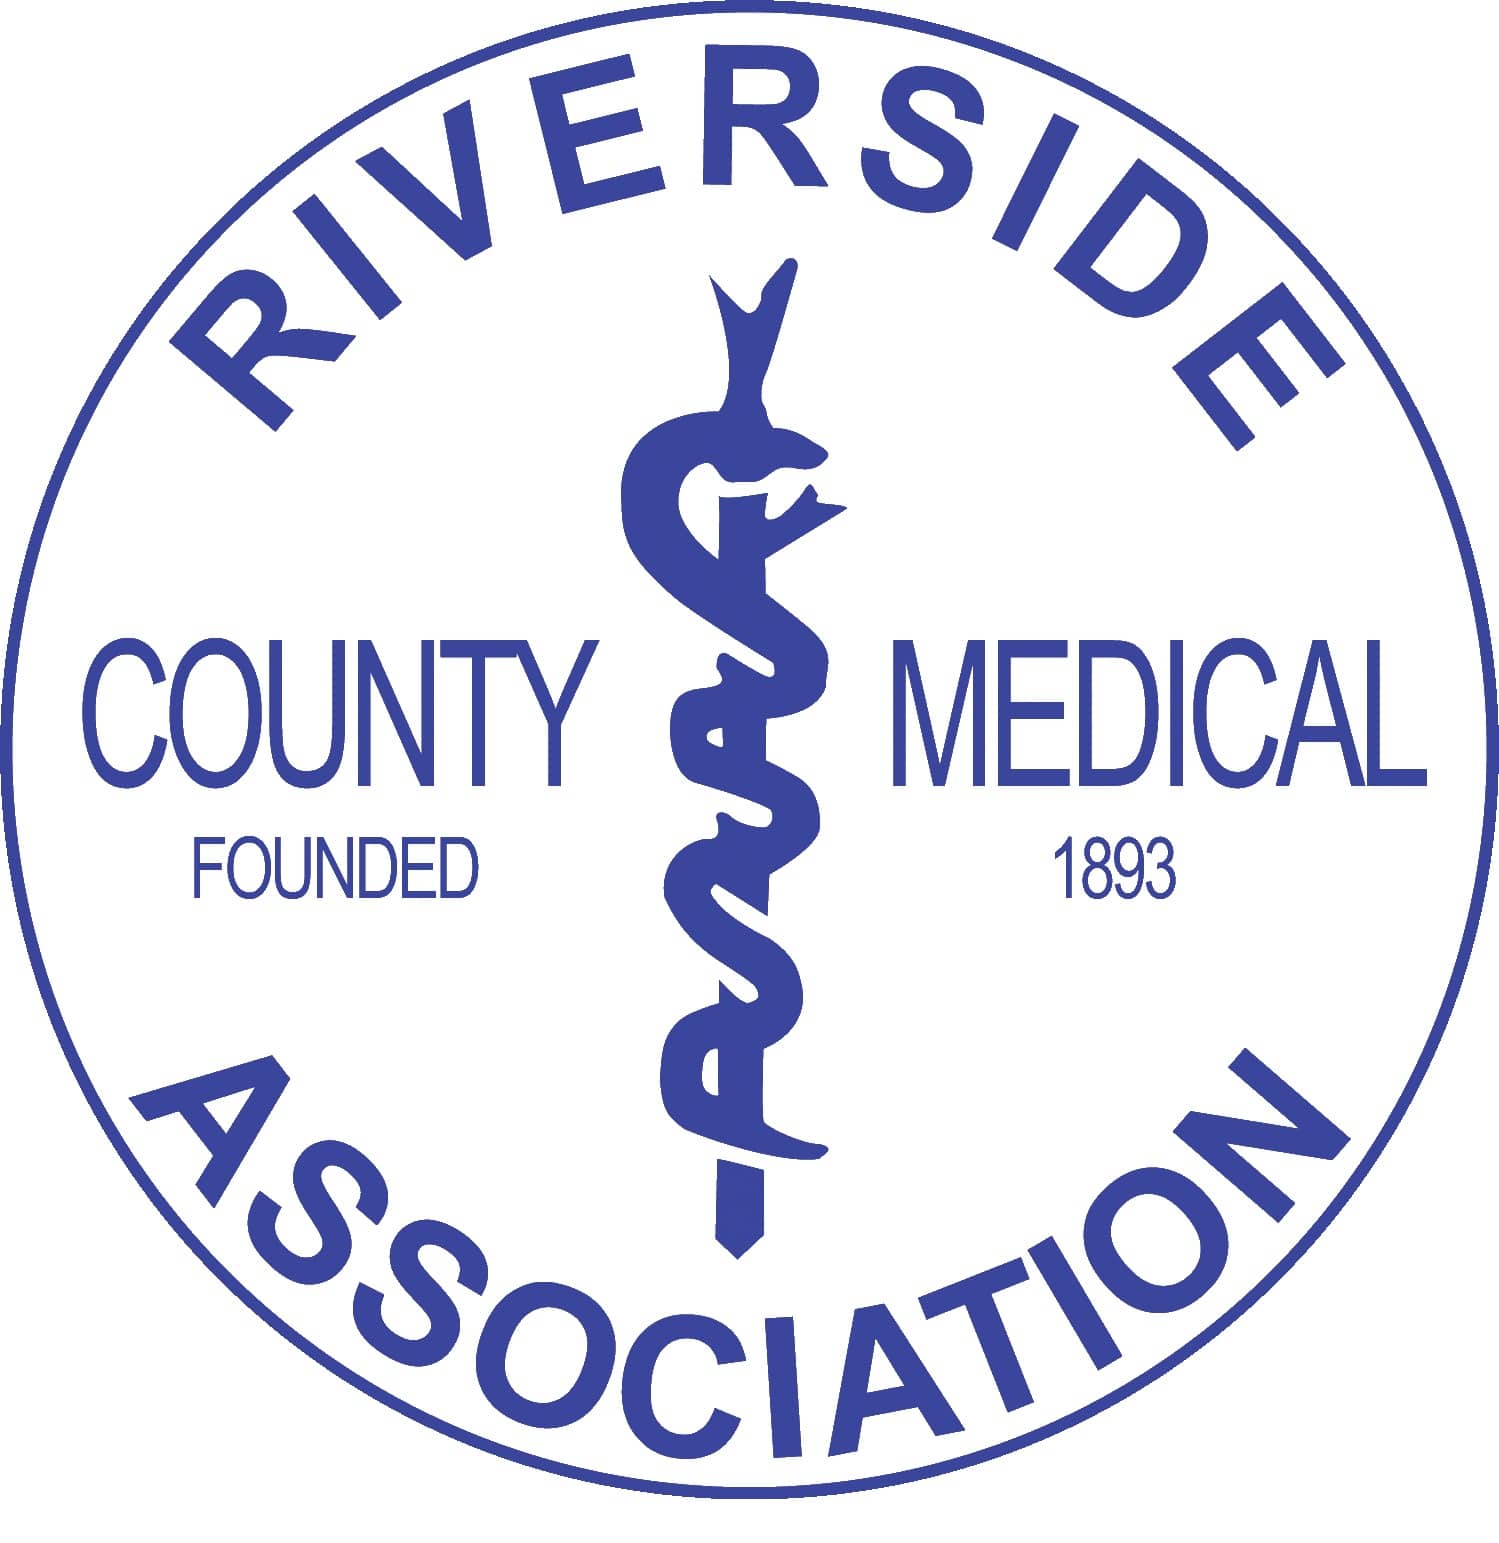 Riverside County Medical Association